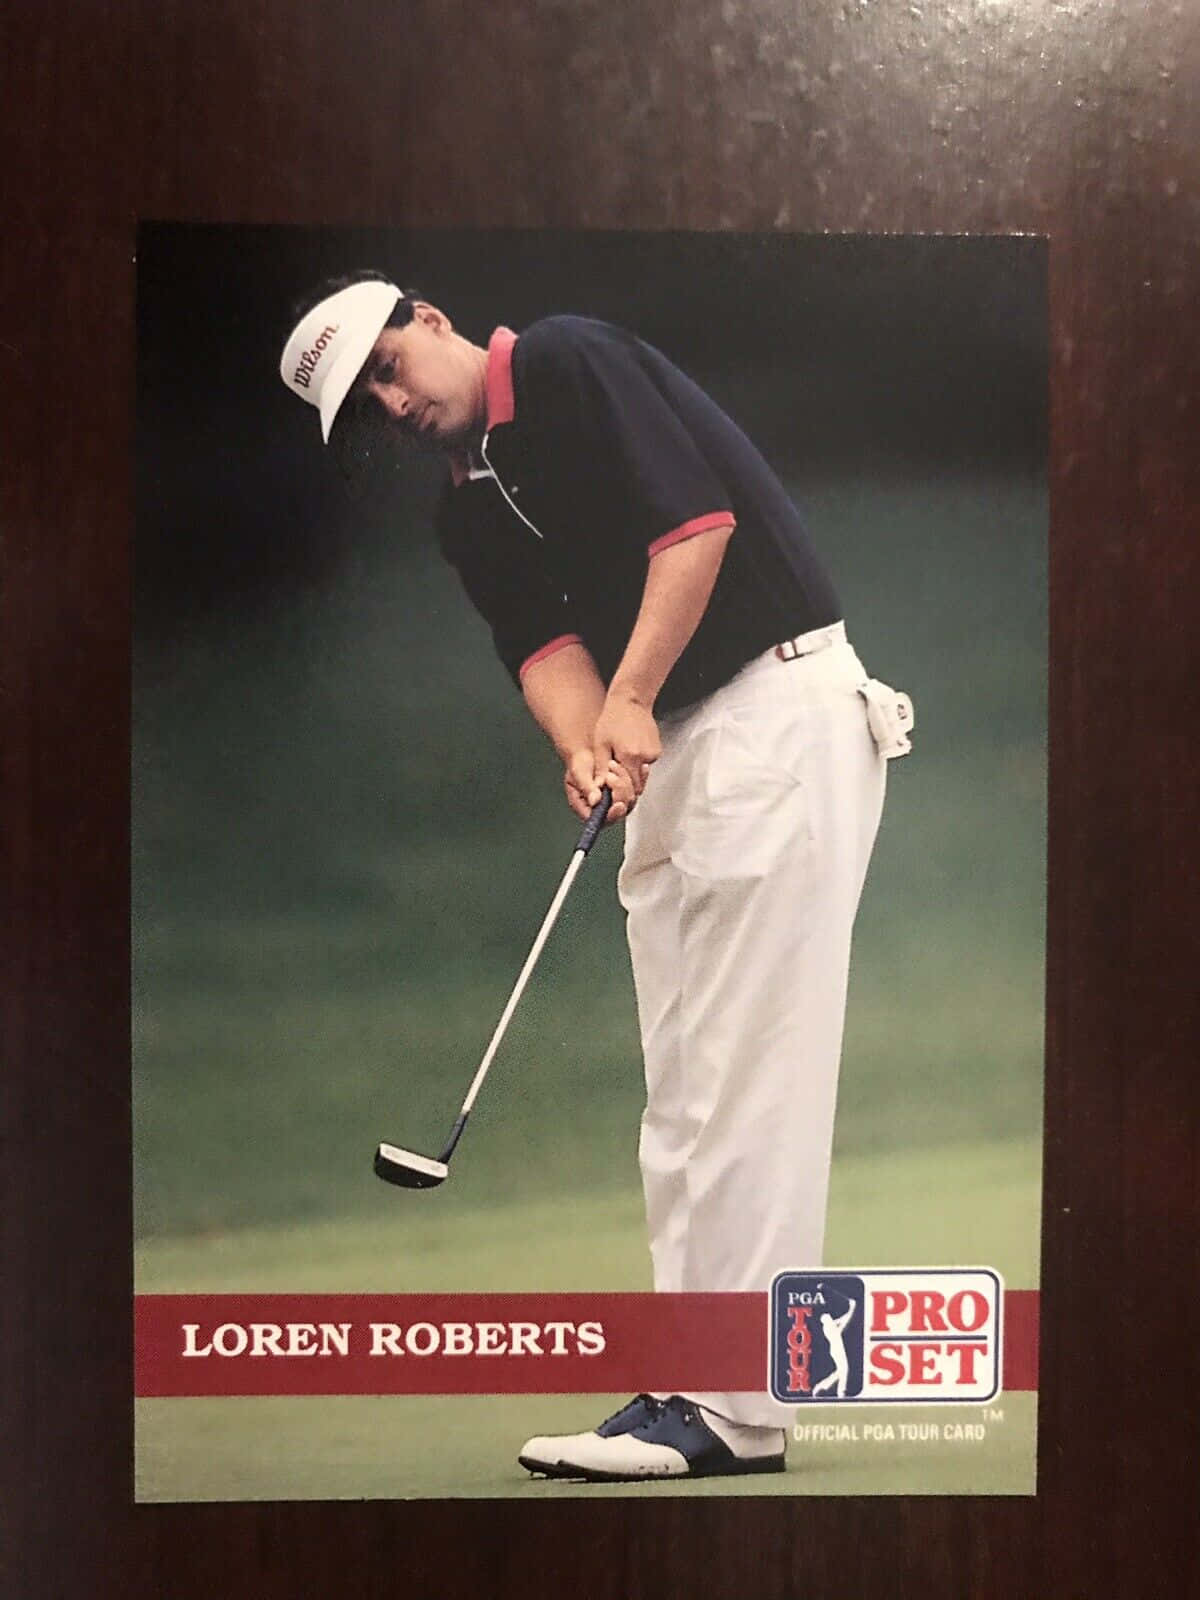 Download Loren Roberts PGA Tour Card Wallpaper | Wallpapers.com